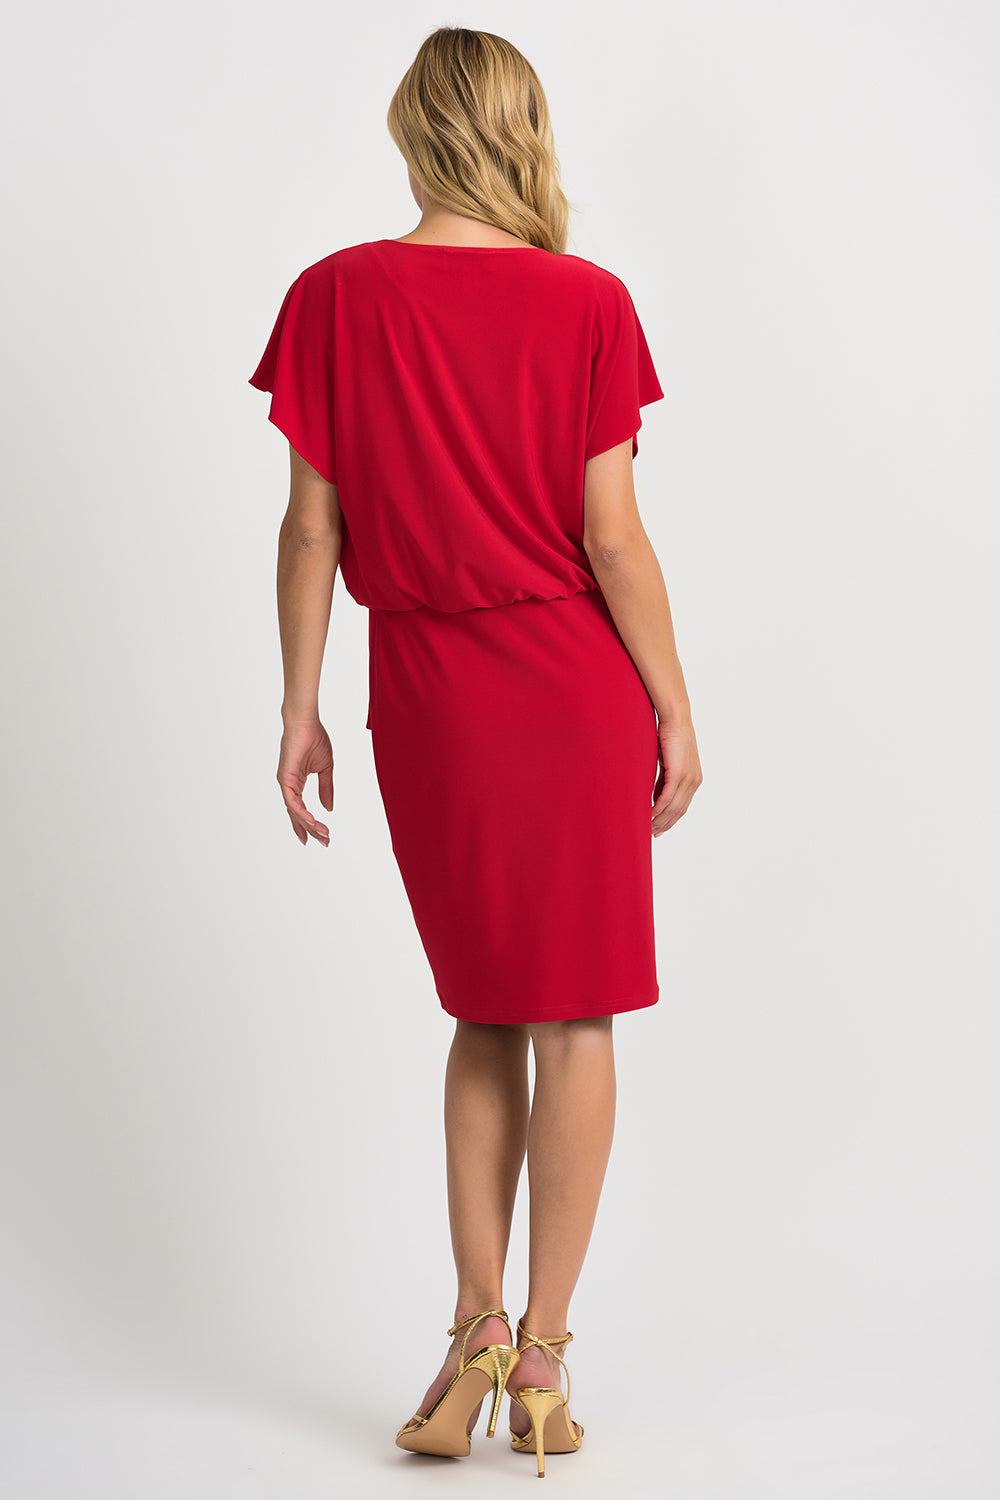 Joseph Ribkoff Lipstick Red Dress Style 201147